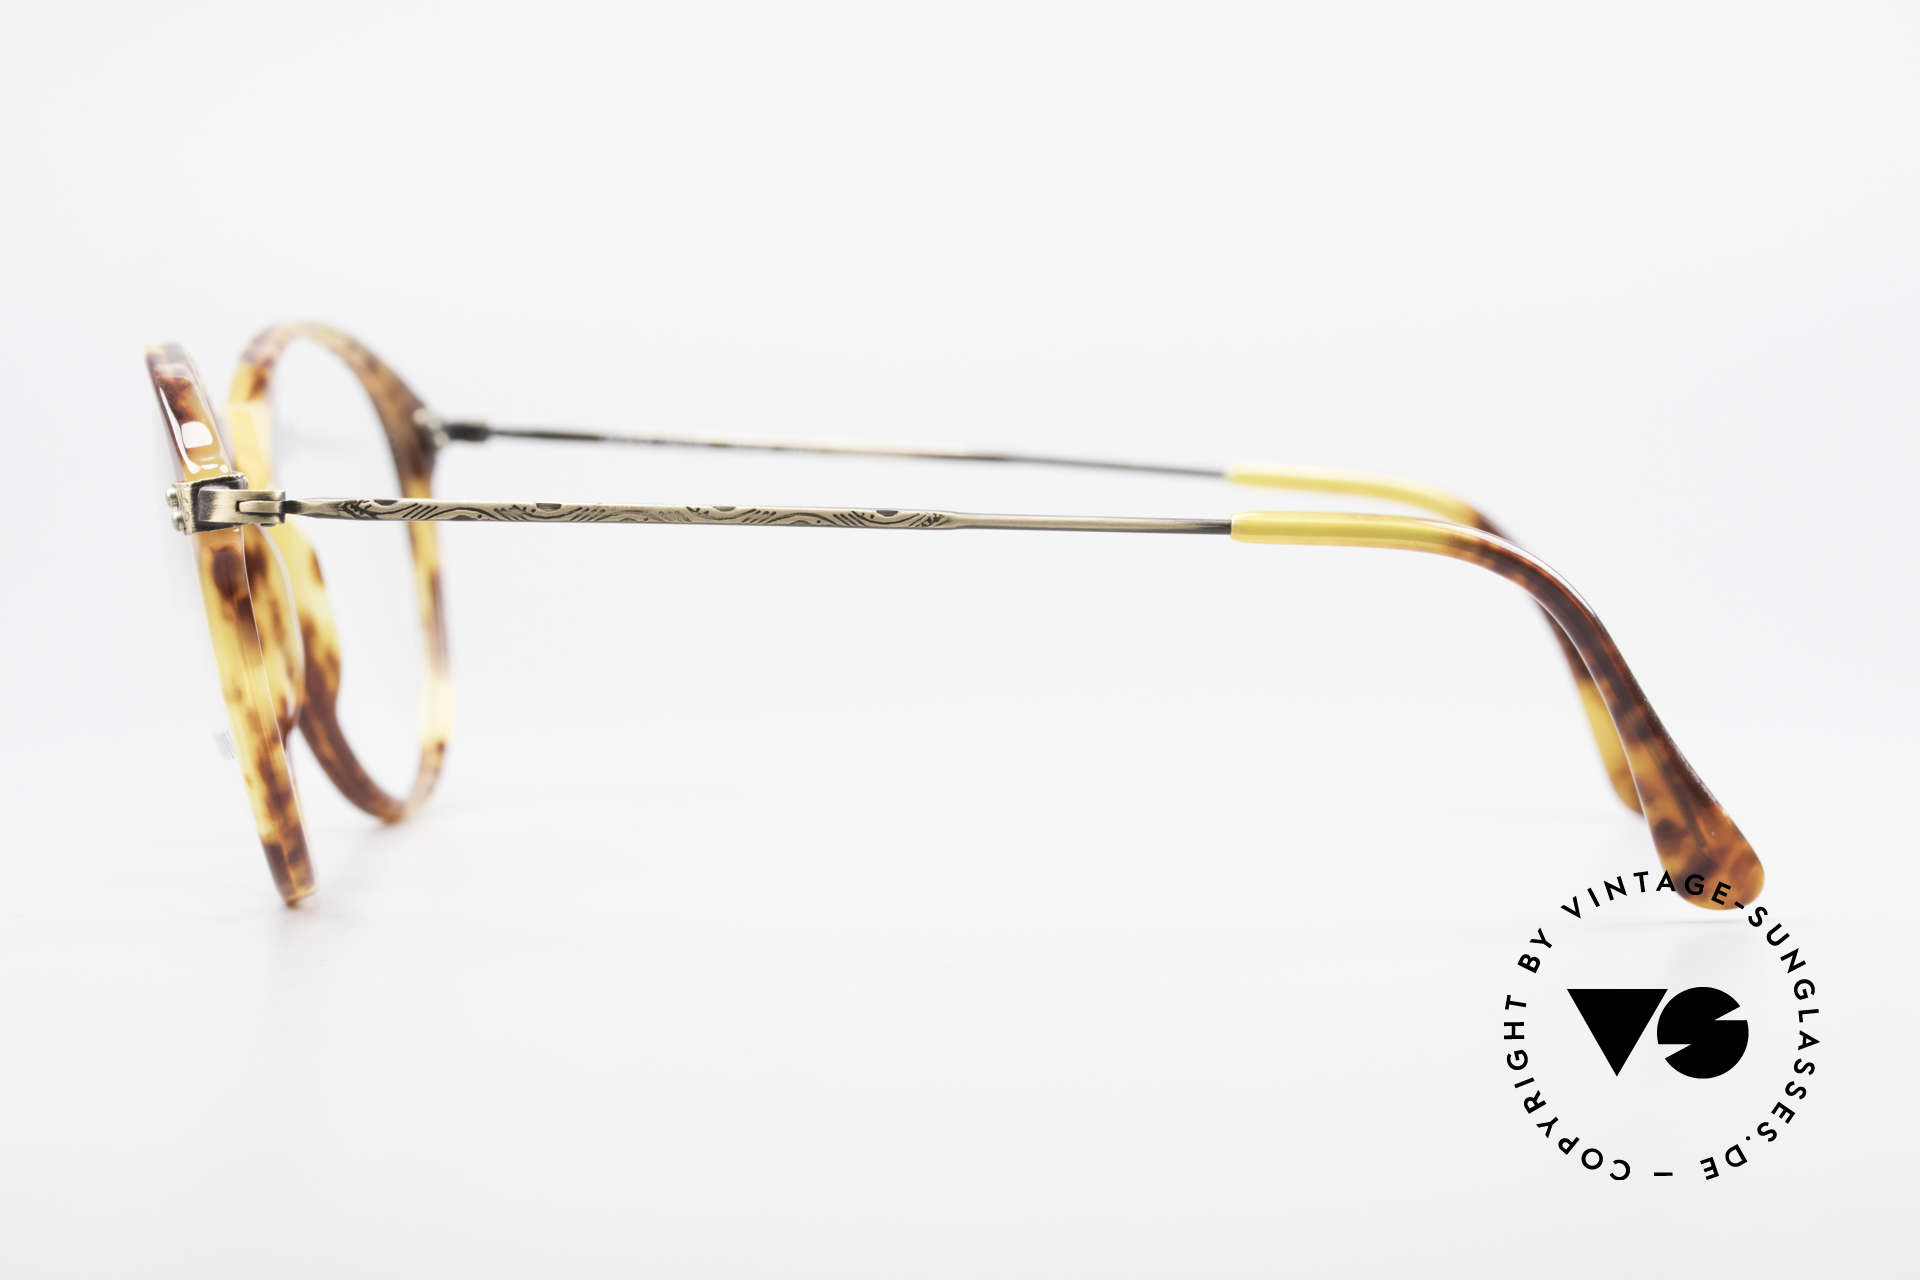 Giorgio Armani 329 90's Panto Glasses Medium, NO retro specs, but a unique 25 years old ORIGINAL!, Made for Men